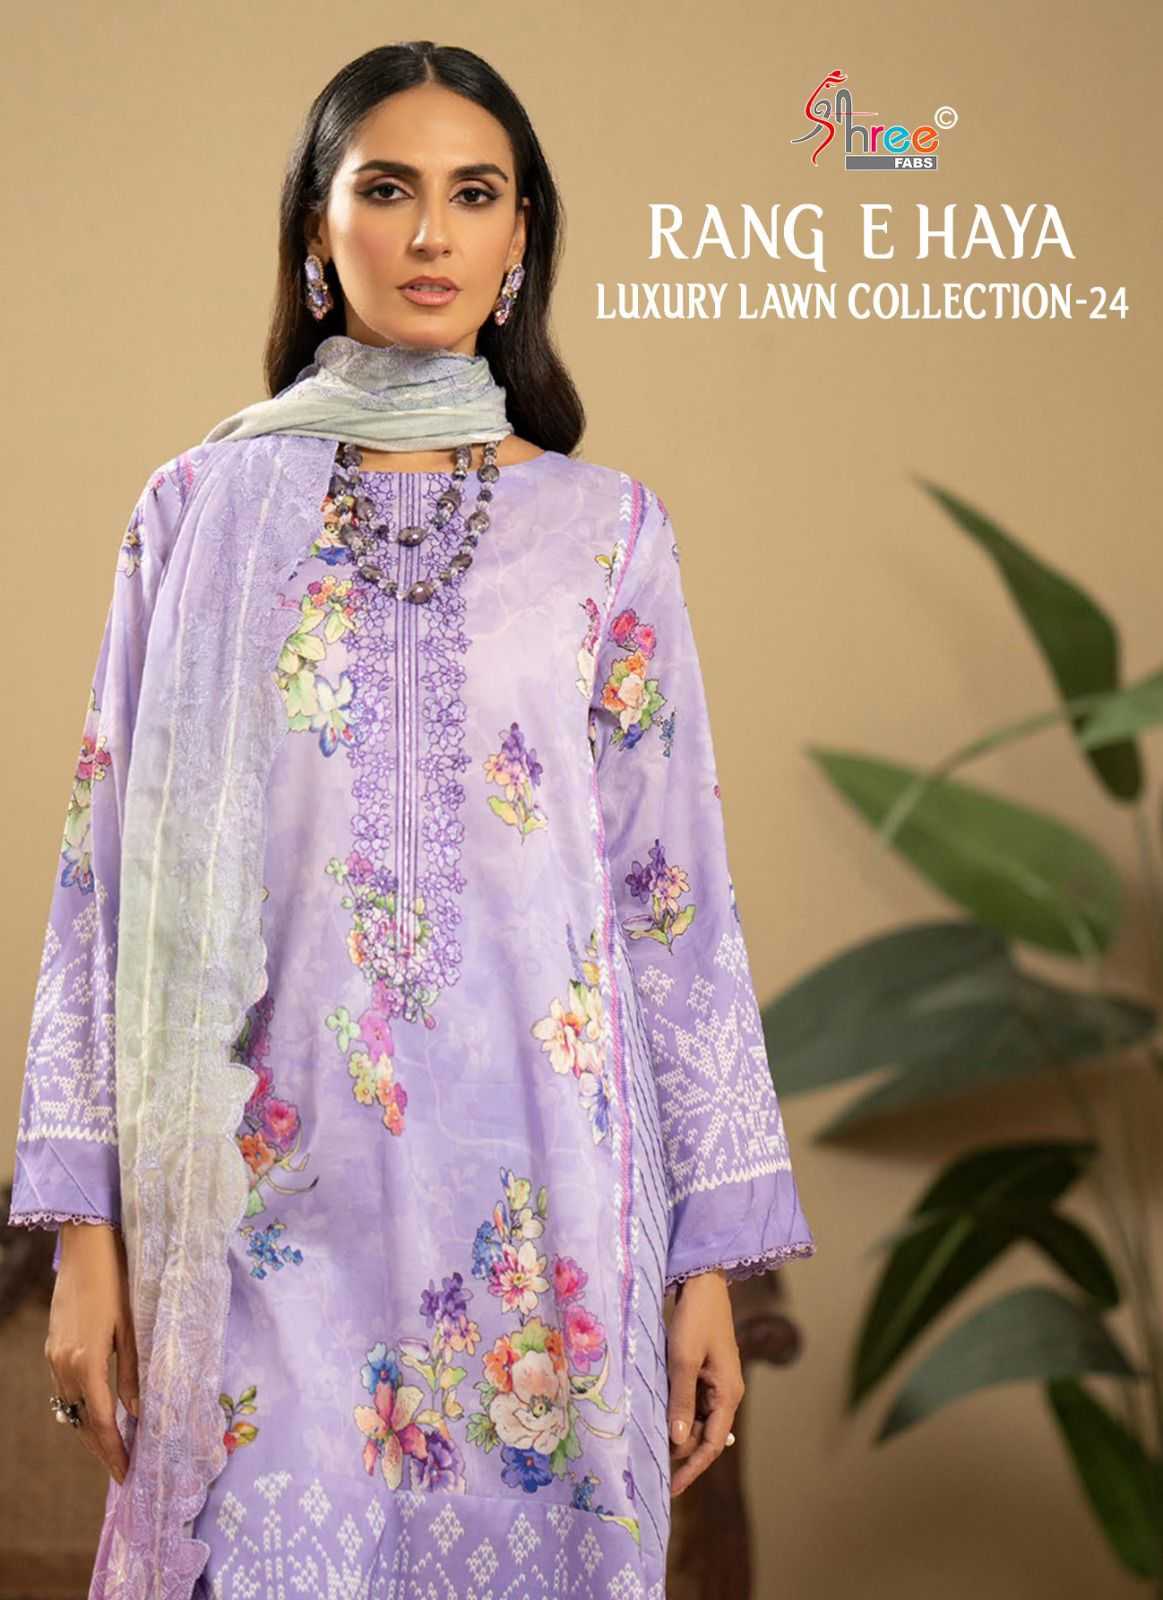 shree fab rang e haya luxury lawn collection vol 1 amazing patch work pakistani dress material 